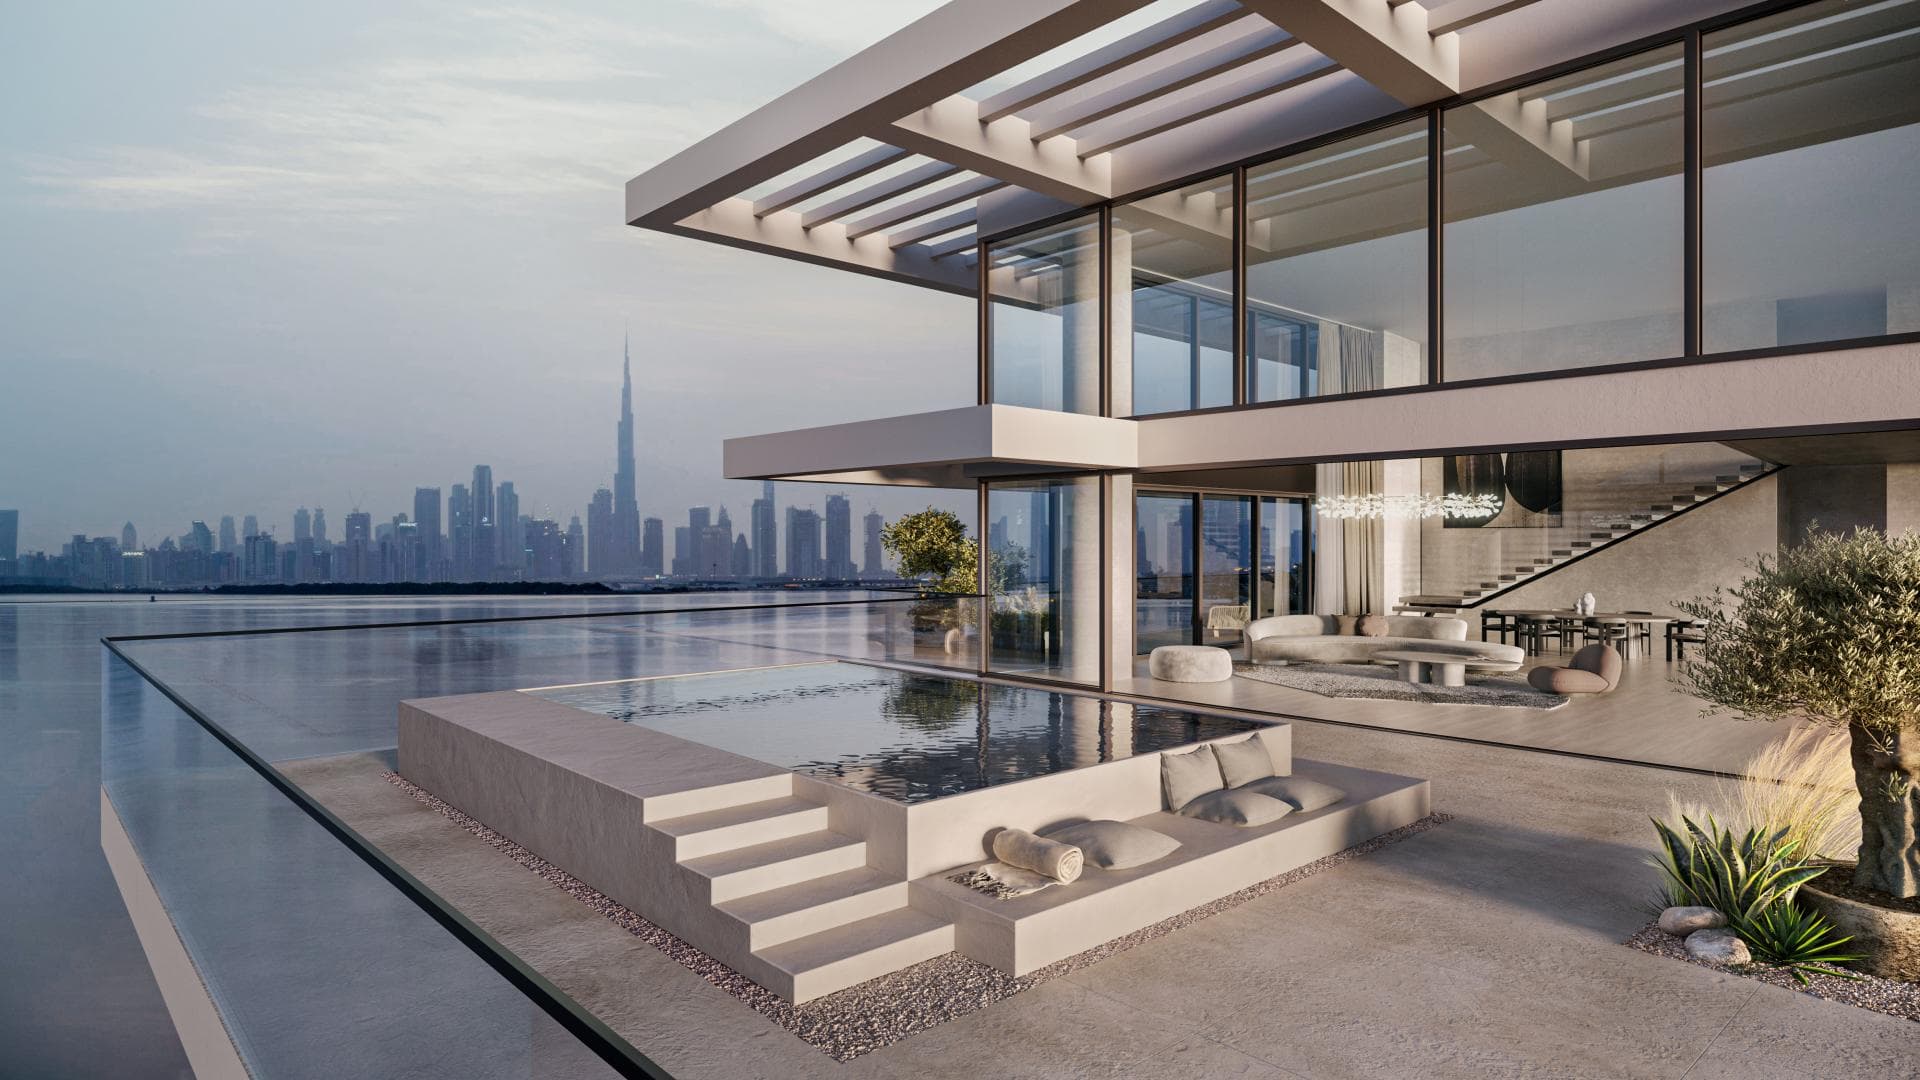 1 Bedroom Apartment For Sale Kempinski Residences The Creek Dubai Lp15626 1ced2dcba2d4a100.jpg